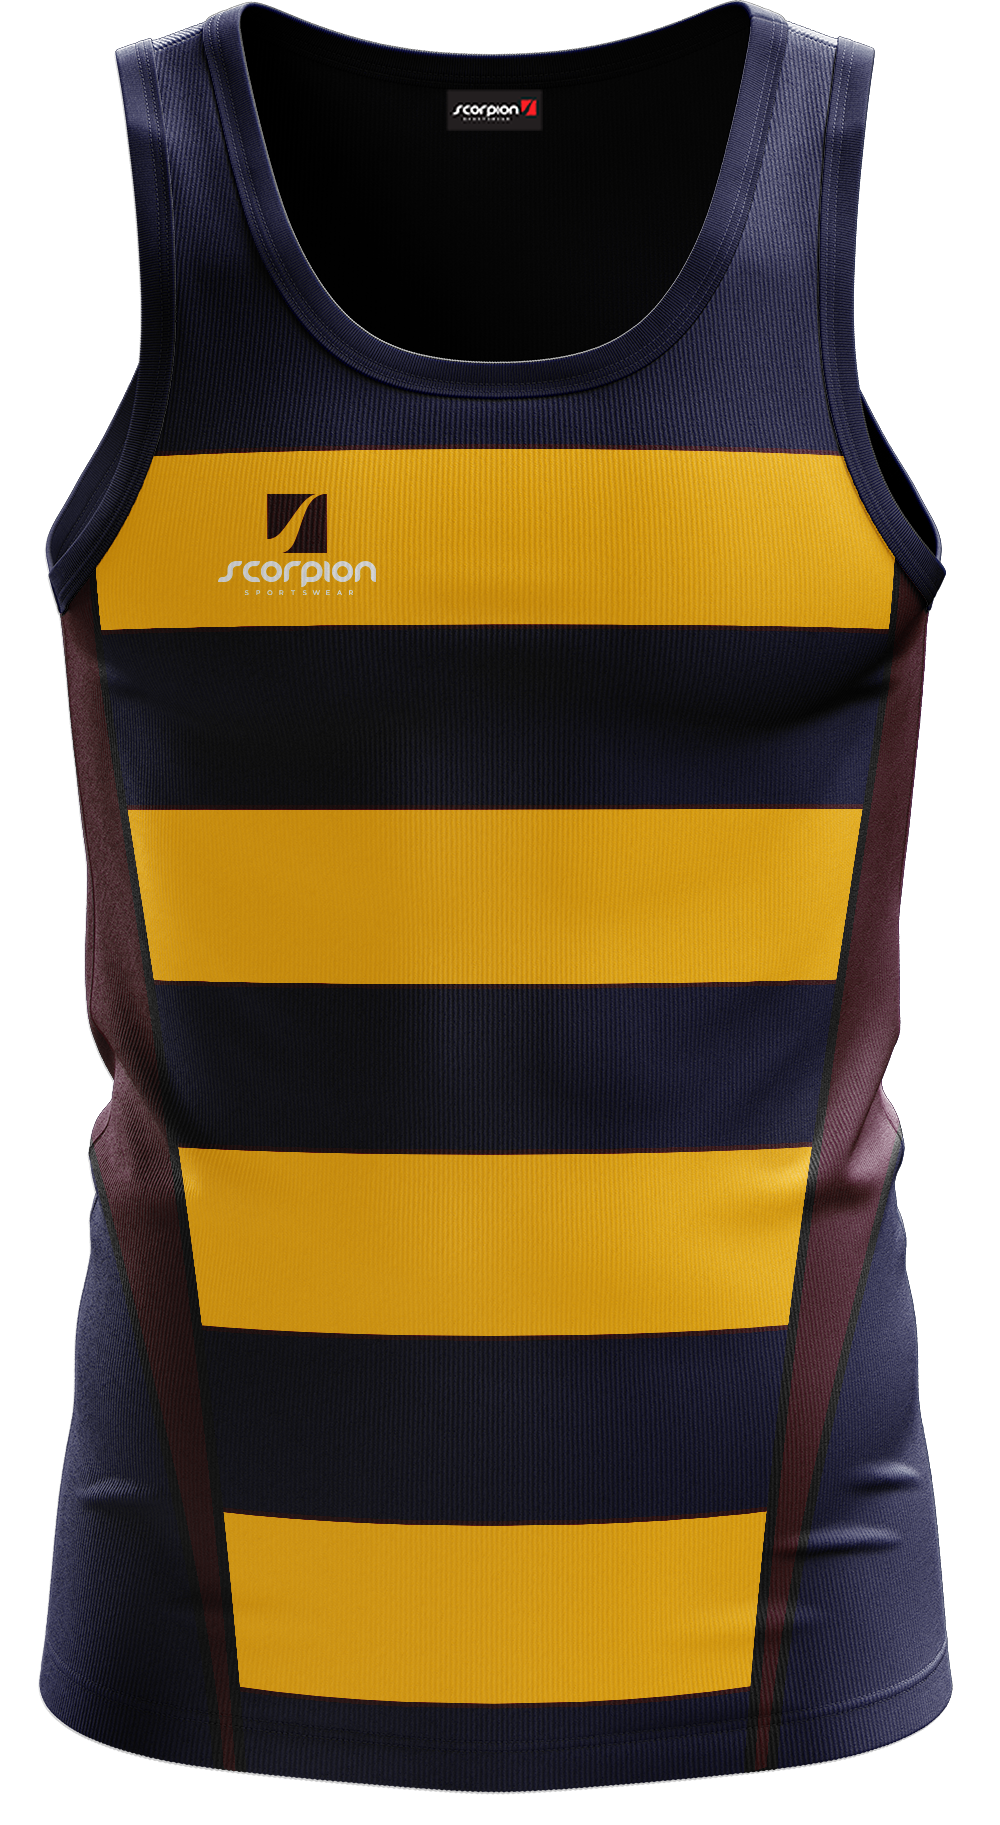 Scorpion Vests Pattern 6 - Navy/Amber/Maroon